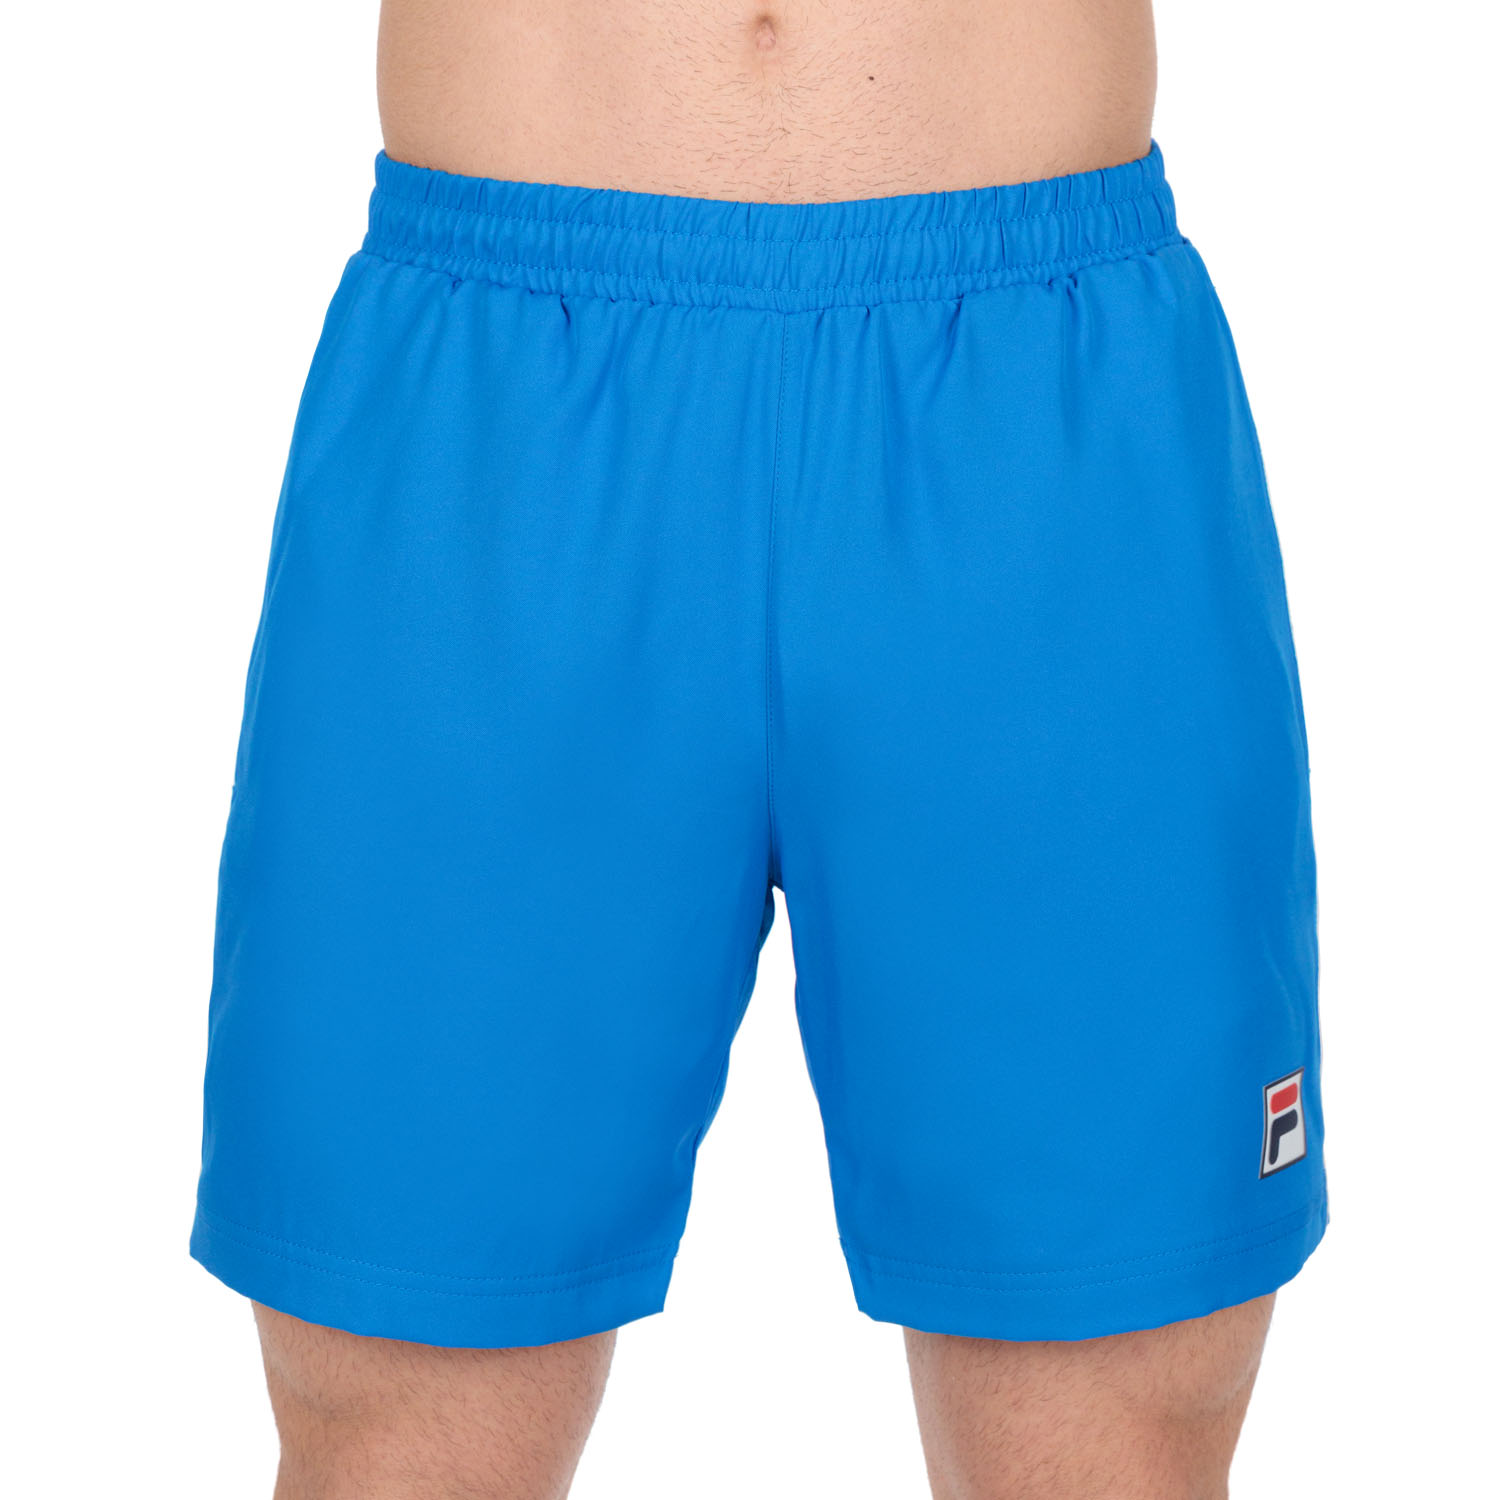 Fila Leon 7in Shorts - Simply Blue